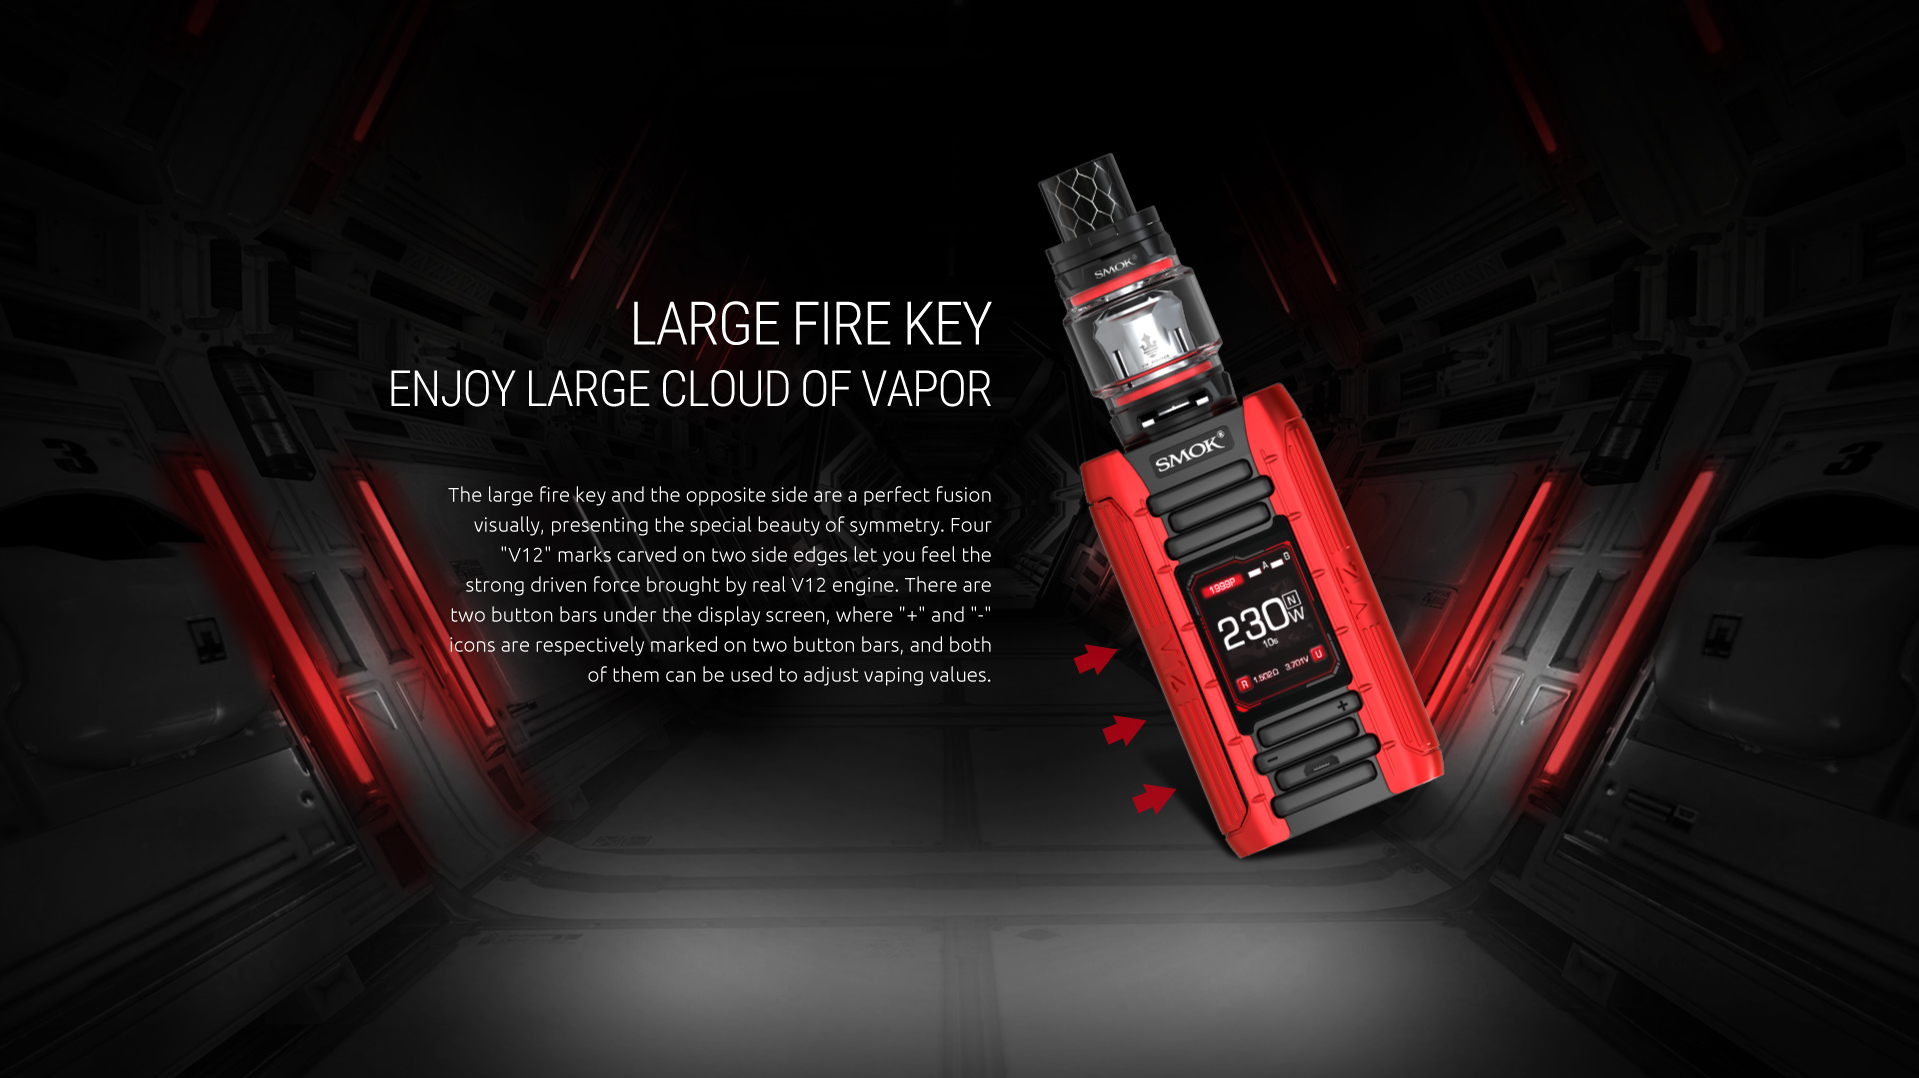 Enjoy Large Cloud Of Vapor - SMOK E-Priv Kit&Mod with Large Fire Key 